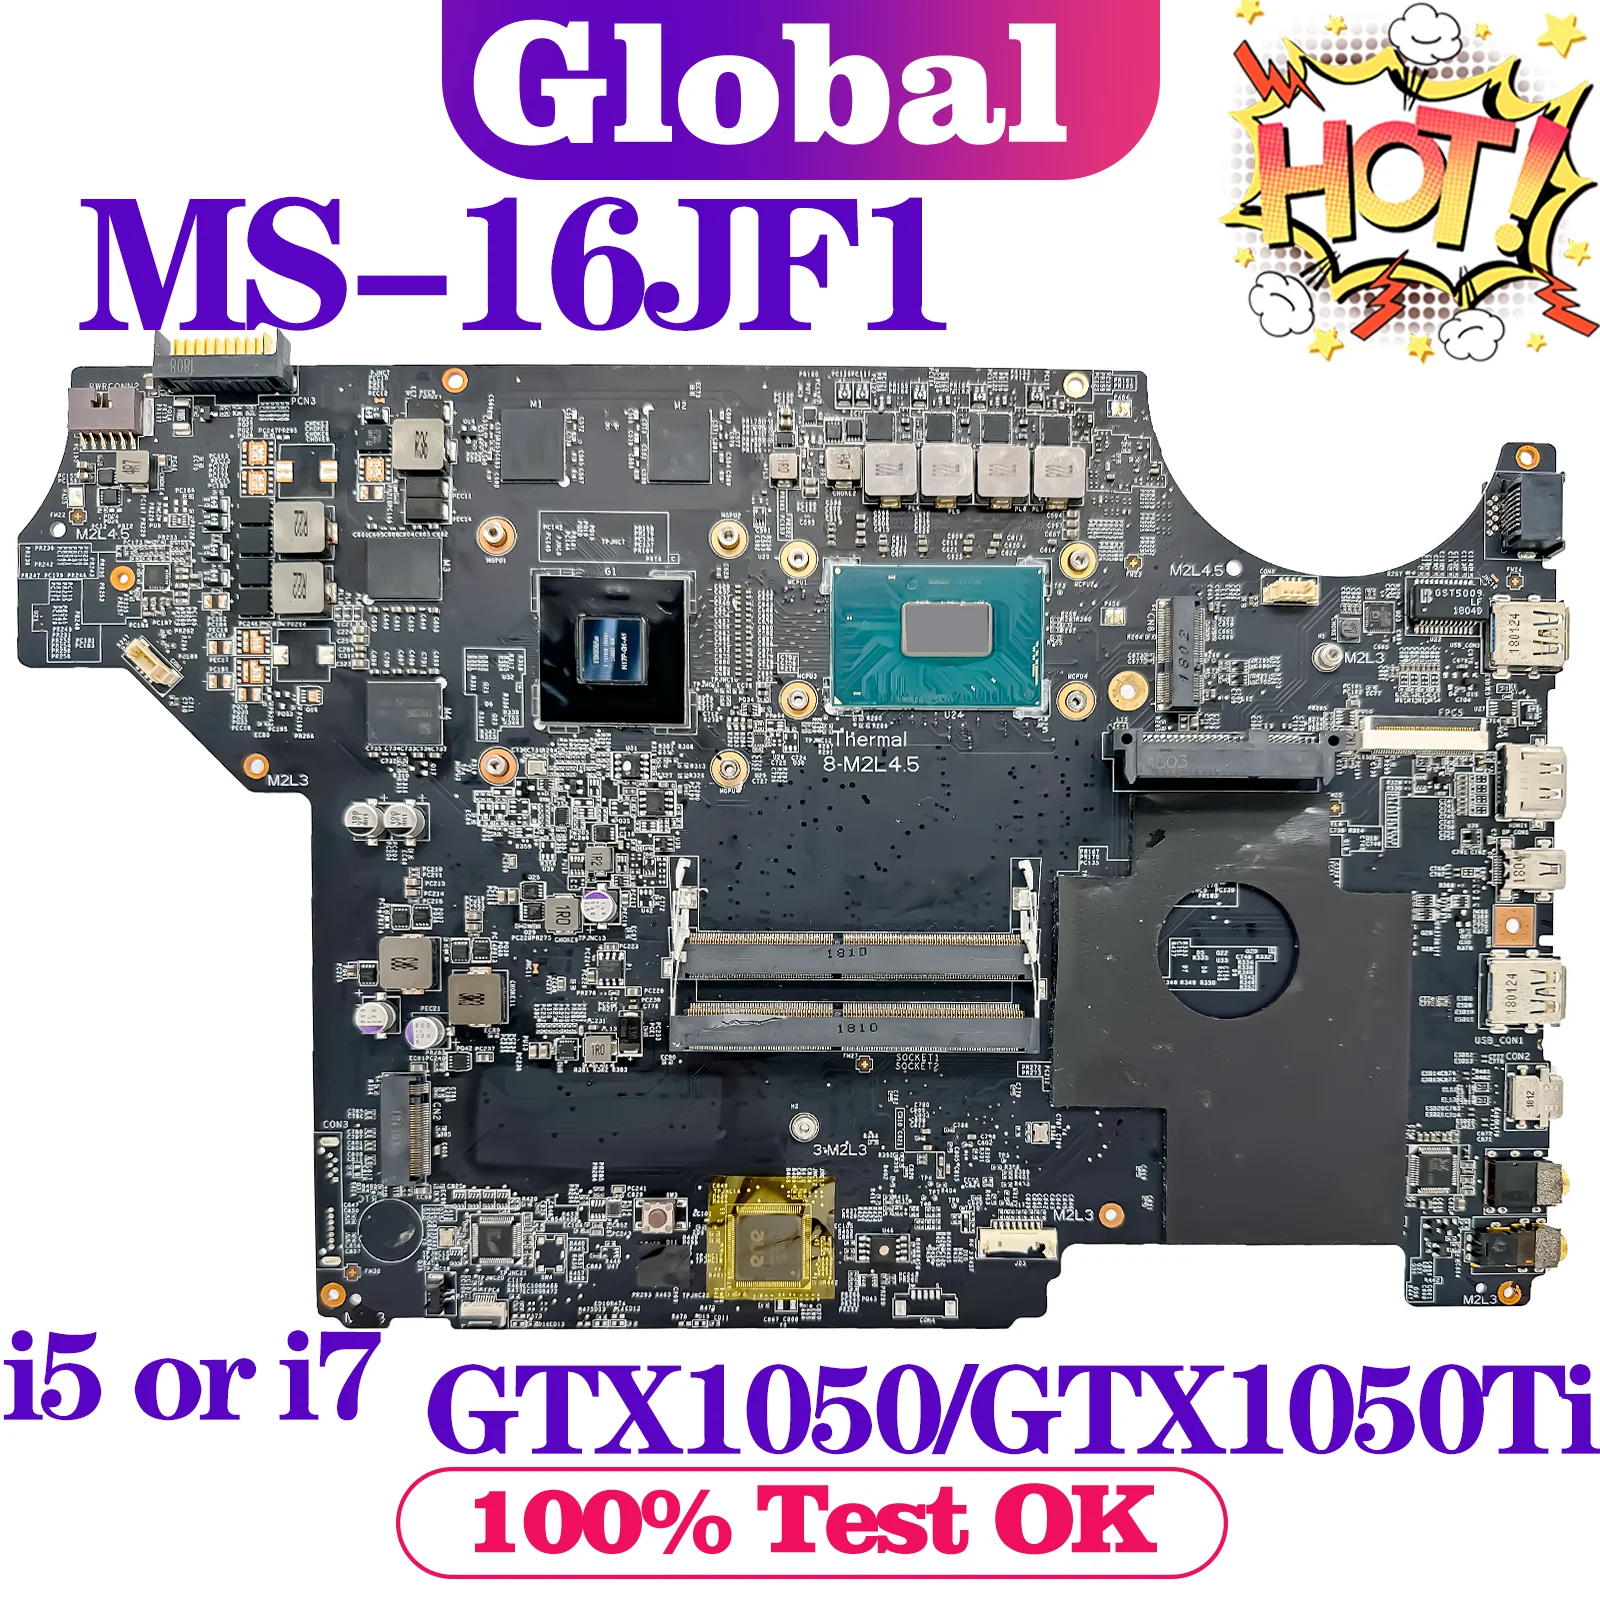 

KEFU Mainboard For MSI MS-16JF1 MS-16JF MS-179F GV62 Laptop Motherboard i5 i7 8th Gen GTX1050/GTX1050Ti-V2G/V4G